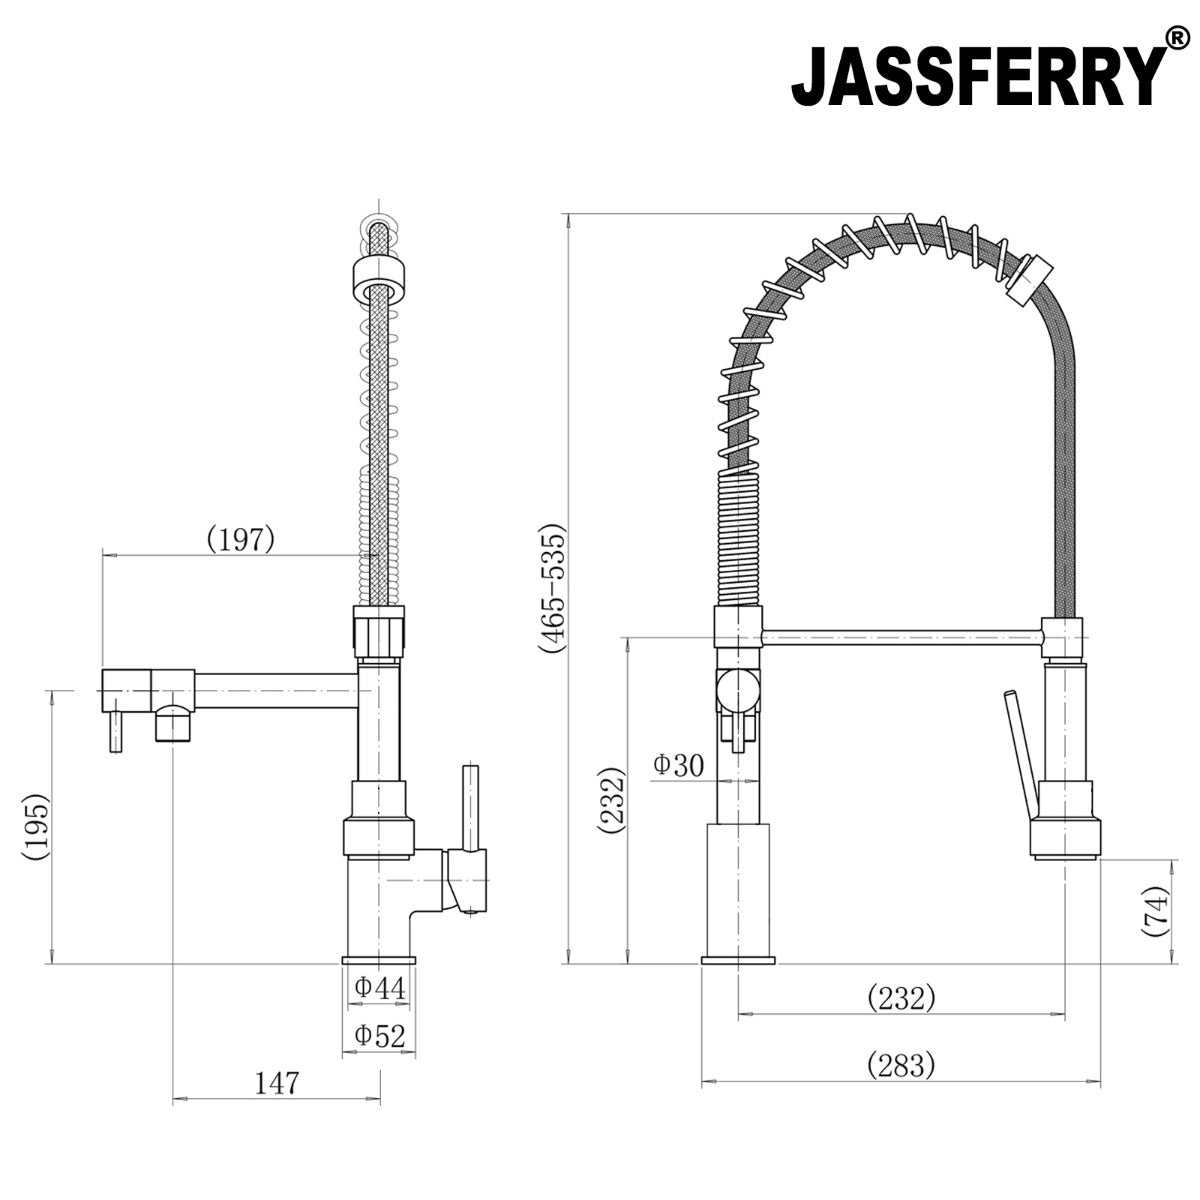 JassferryJASSFERRY Kitchen Sink Tap Chrome Pull Out Sprayer Swivel Mixer SpoutKitchen taps